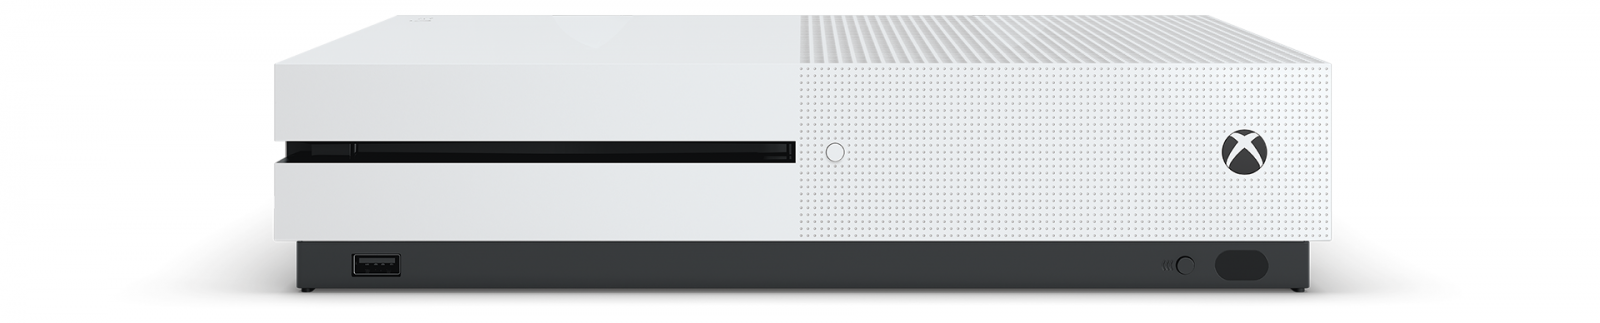 Xbox One S 500GB + FIFA 17 image1